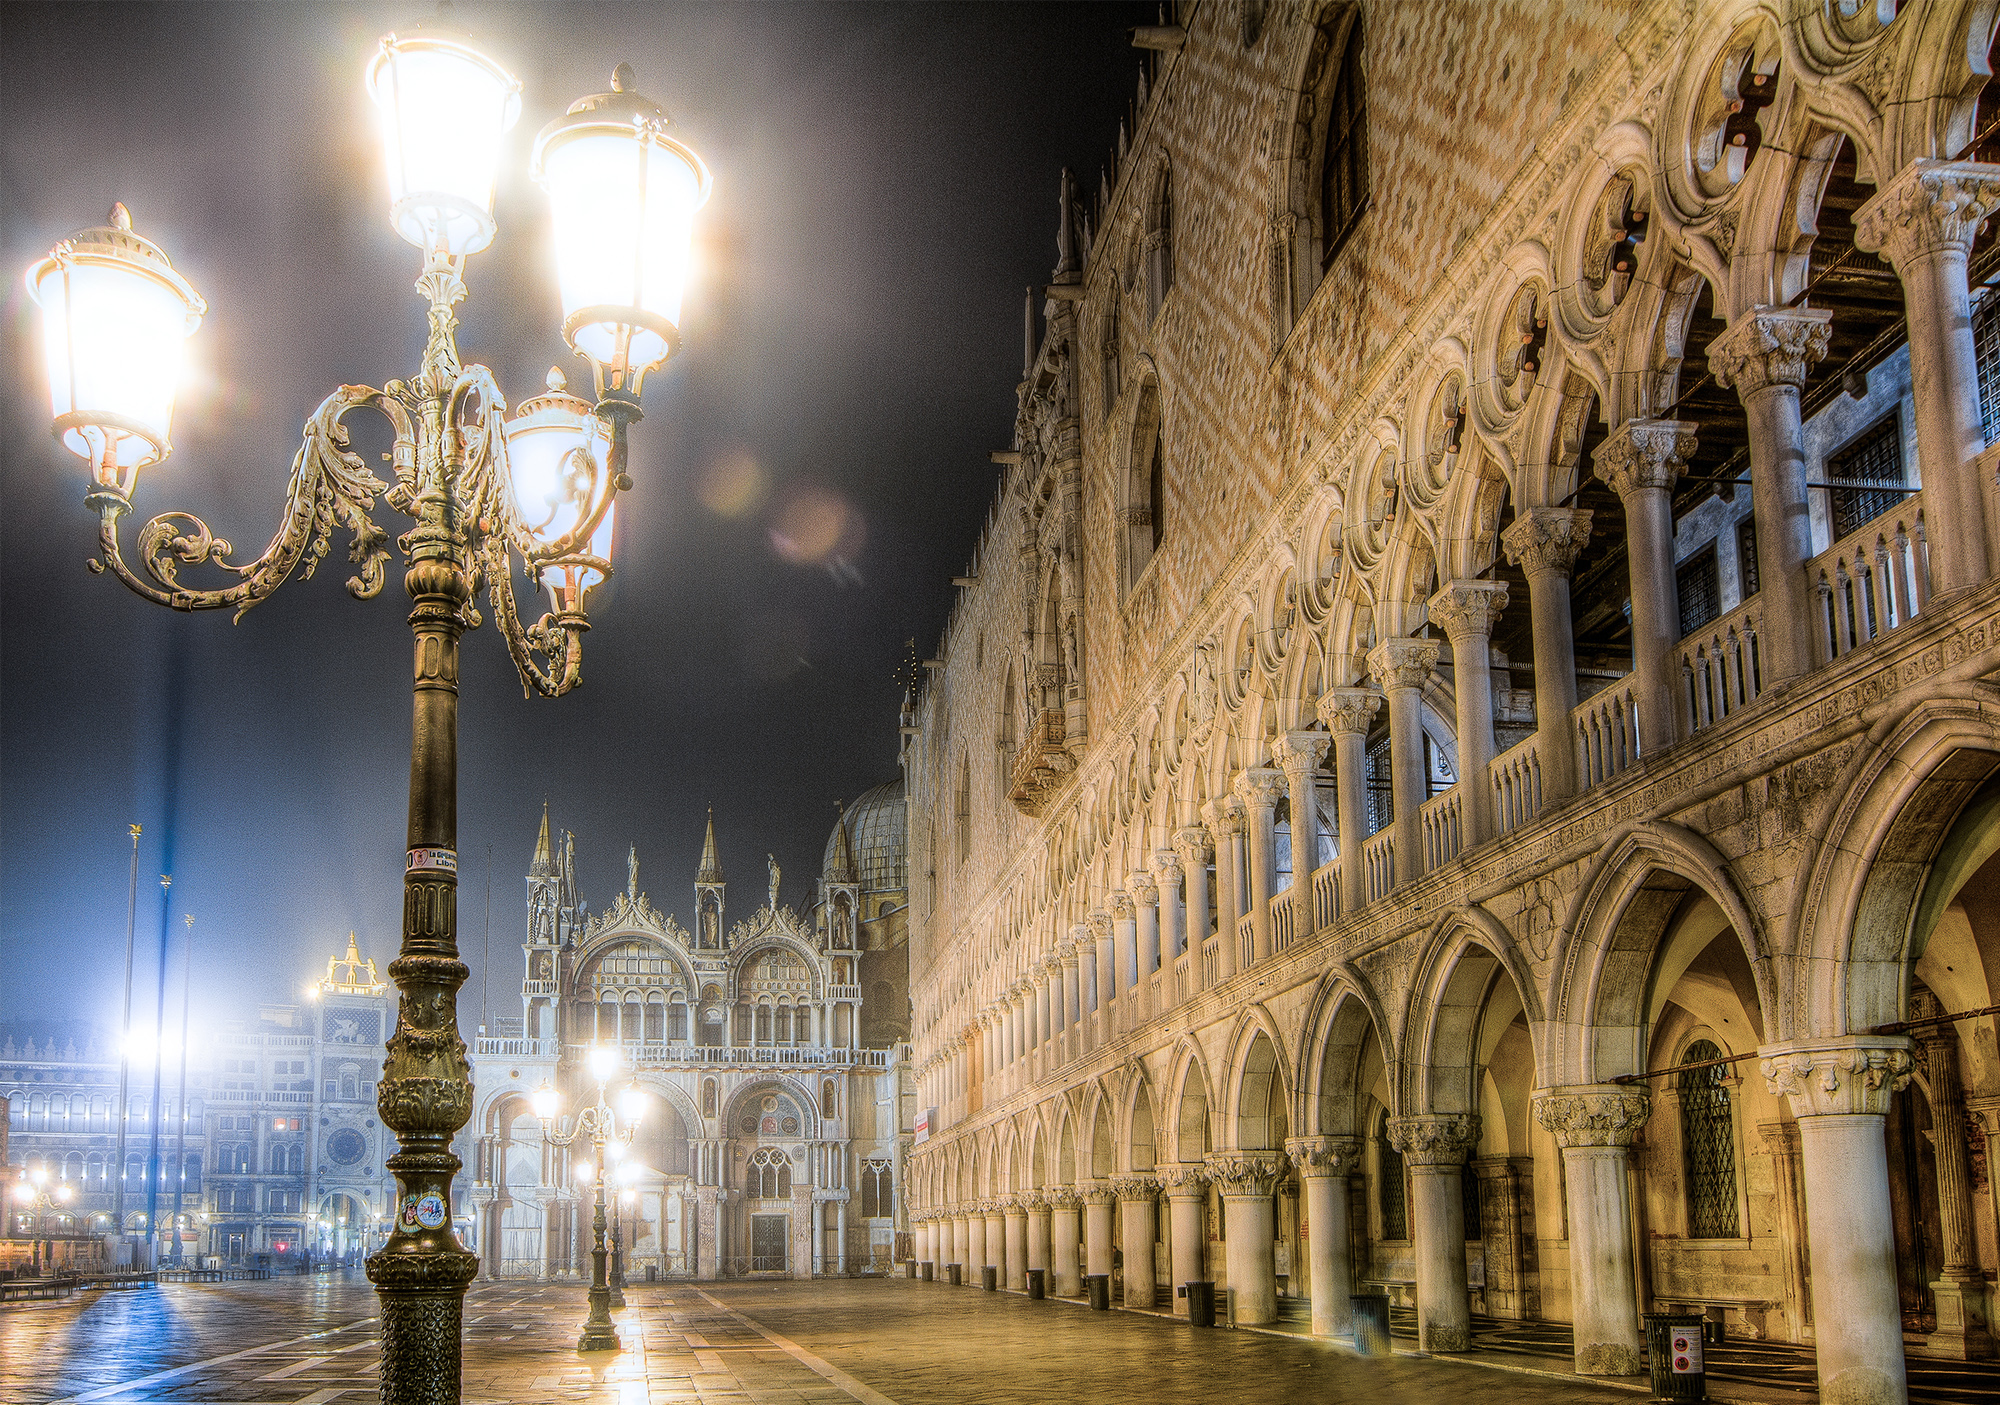  Lights of&nbsp;Piazza San Marco, Venice 